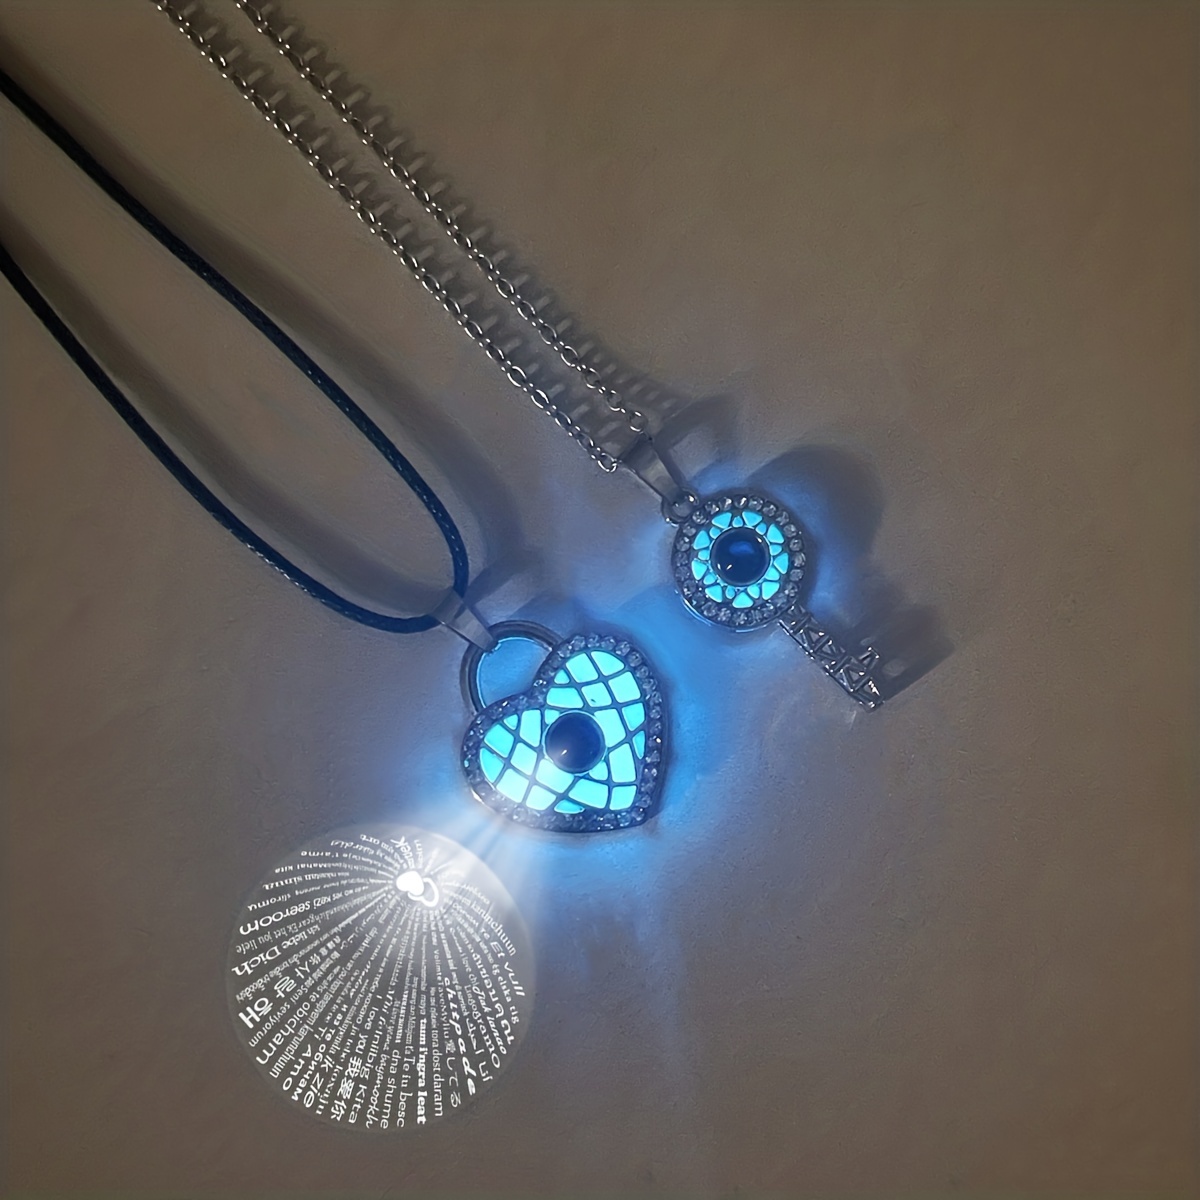 

2pcs/set Luminous Projection I Love You In 100 Languages Heart-shaped Lock & Key Pendant Necklaces For Couple